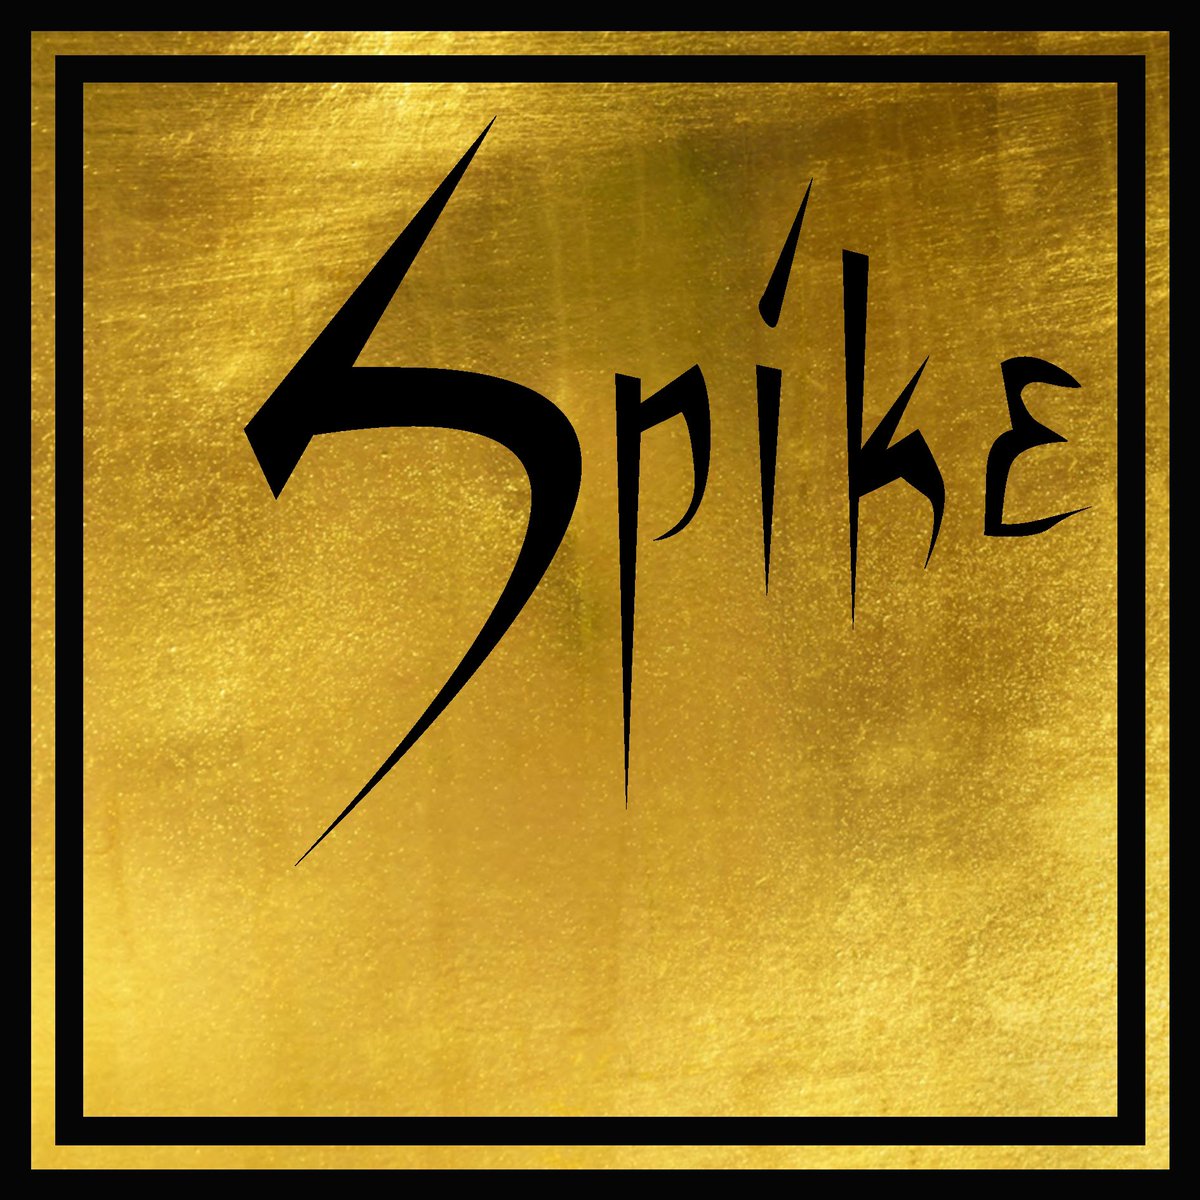 New EP 'Spike' soundcloud.com/chalkywong/set…